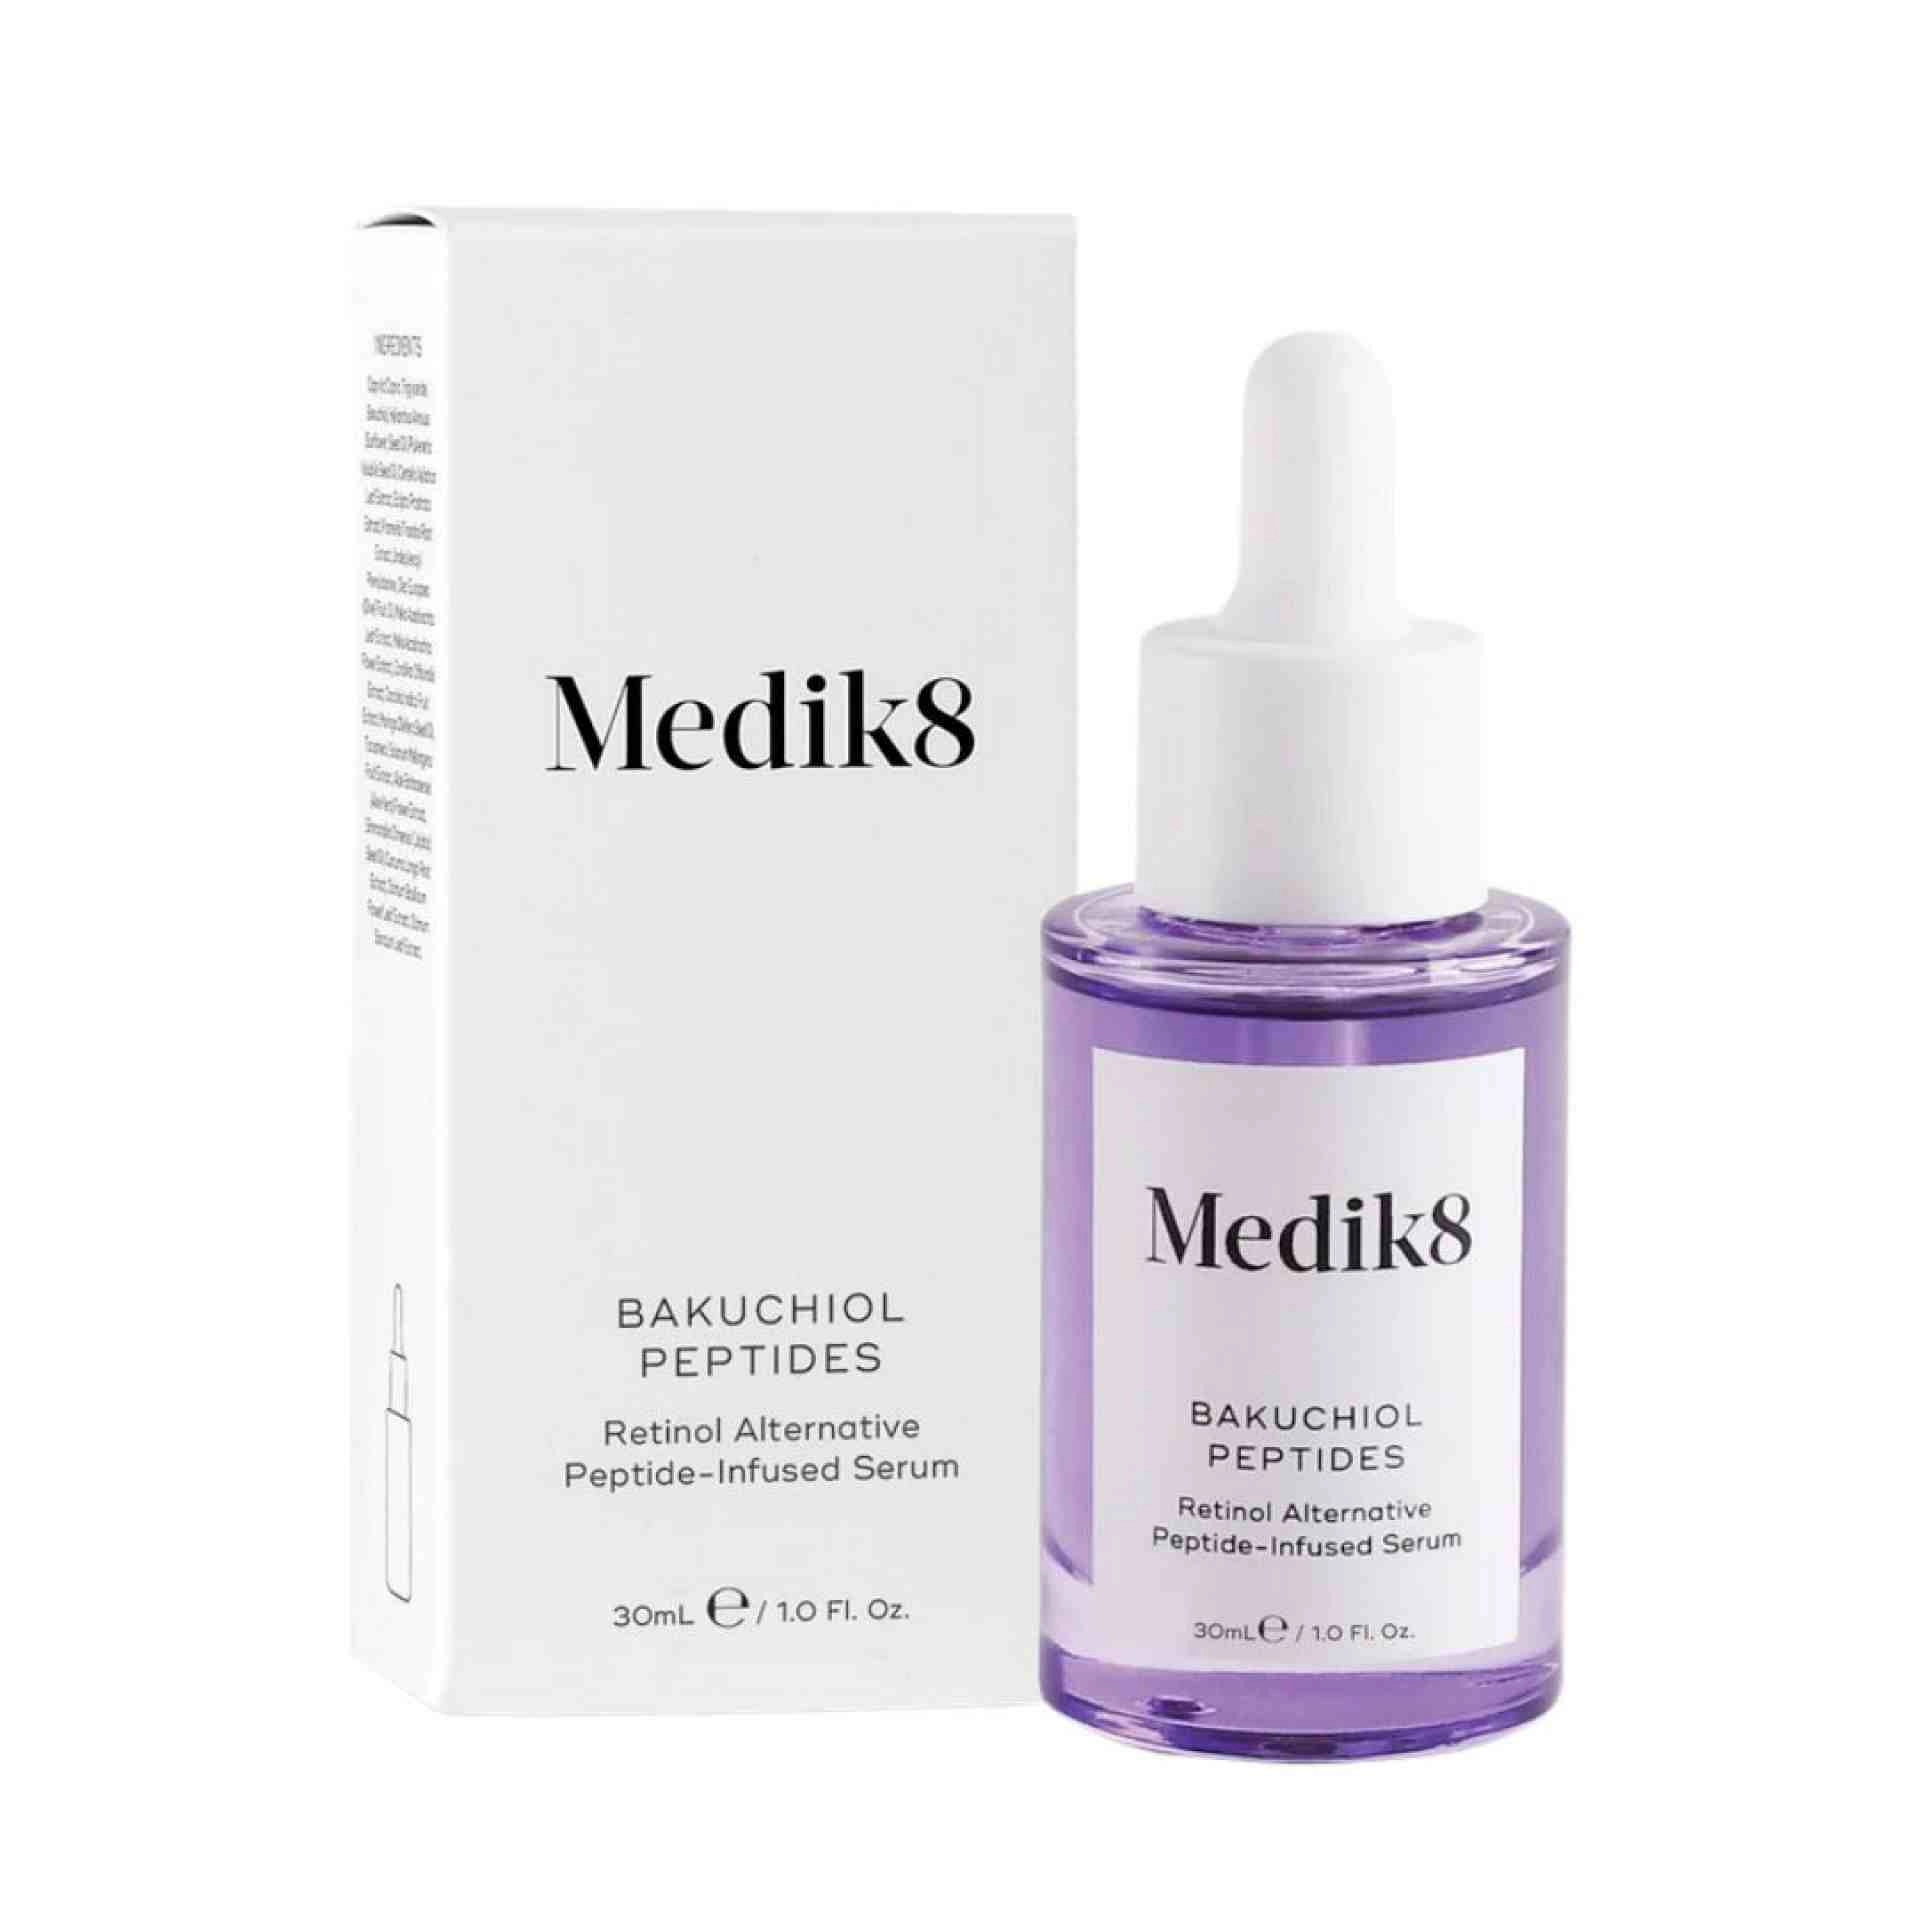 Bakuchiol Peptides | Serum alternativo al retinol 30ml - Peptides - Medik8 ®